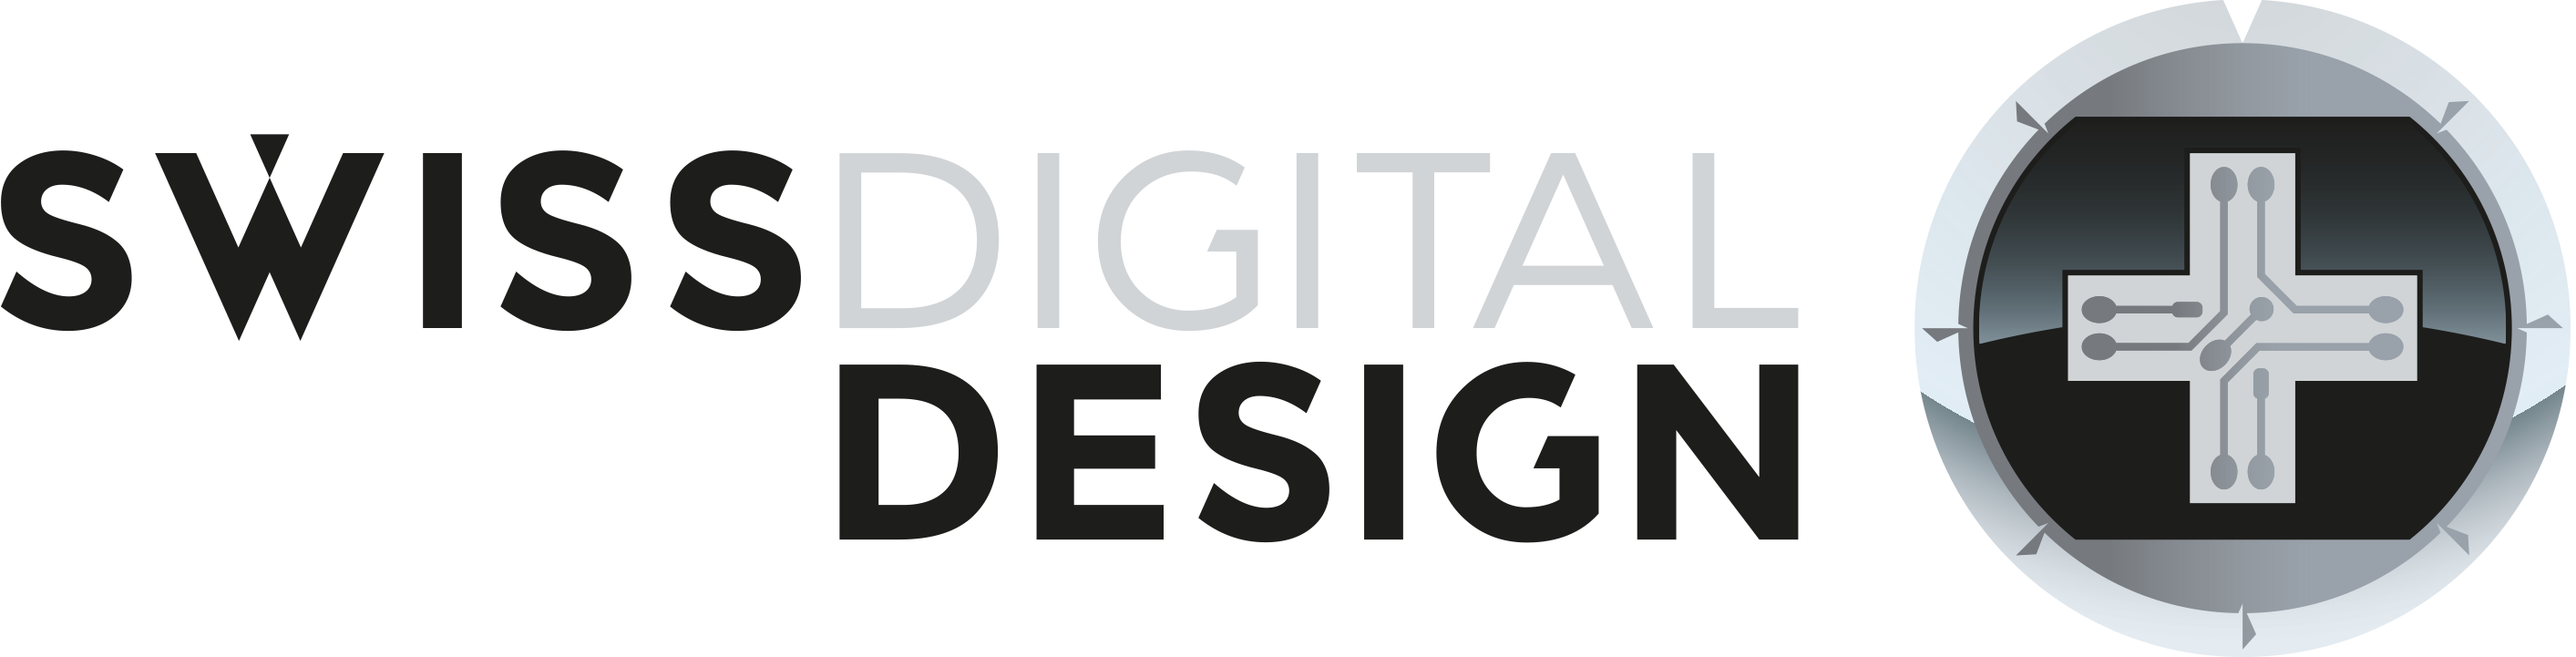 Swissdigital Design